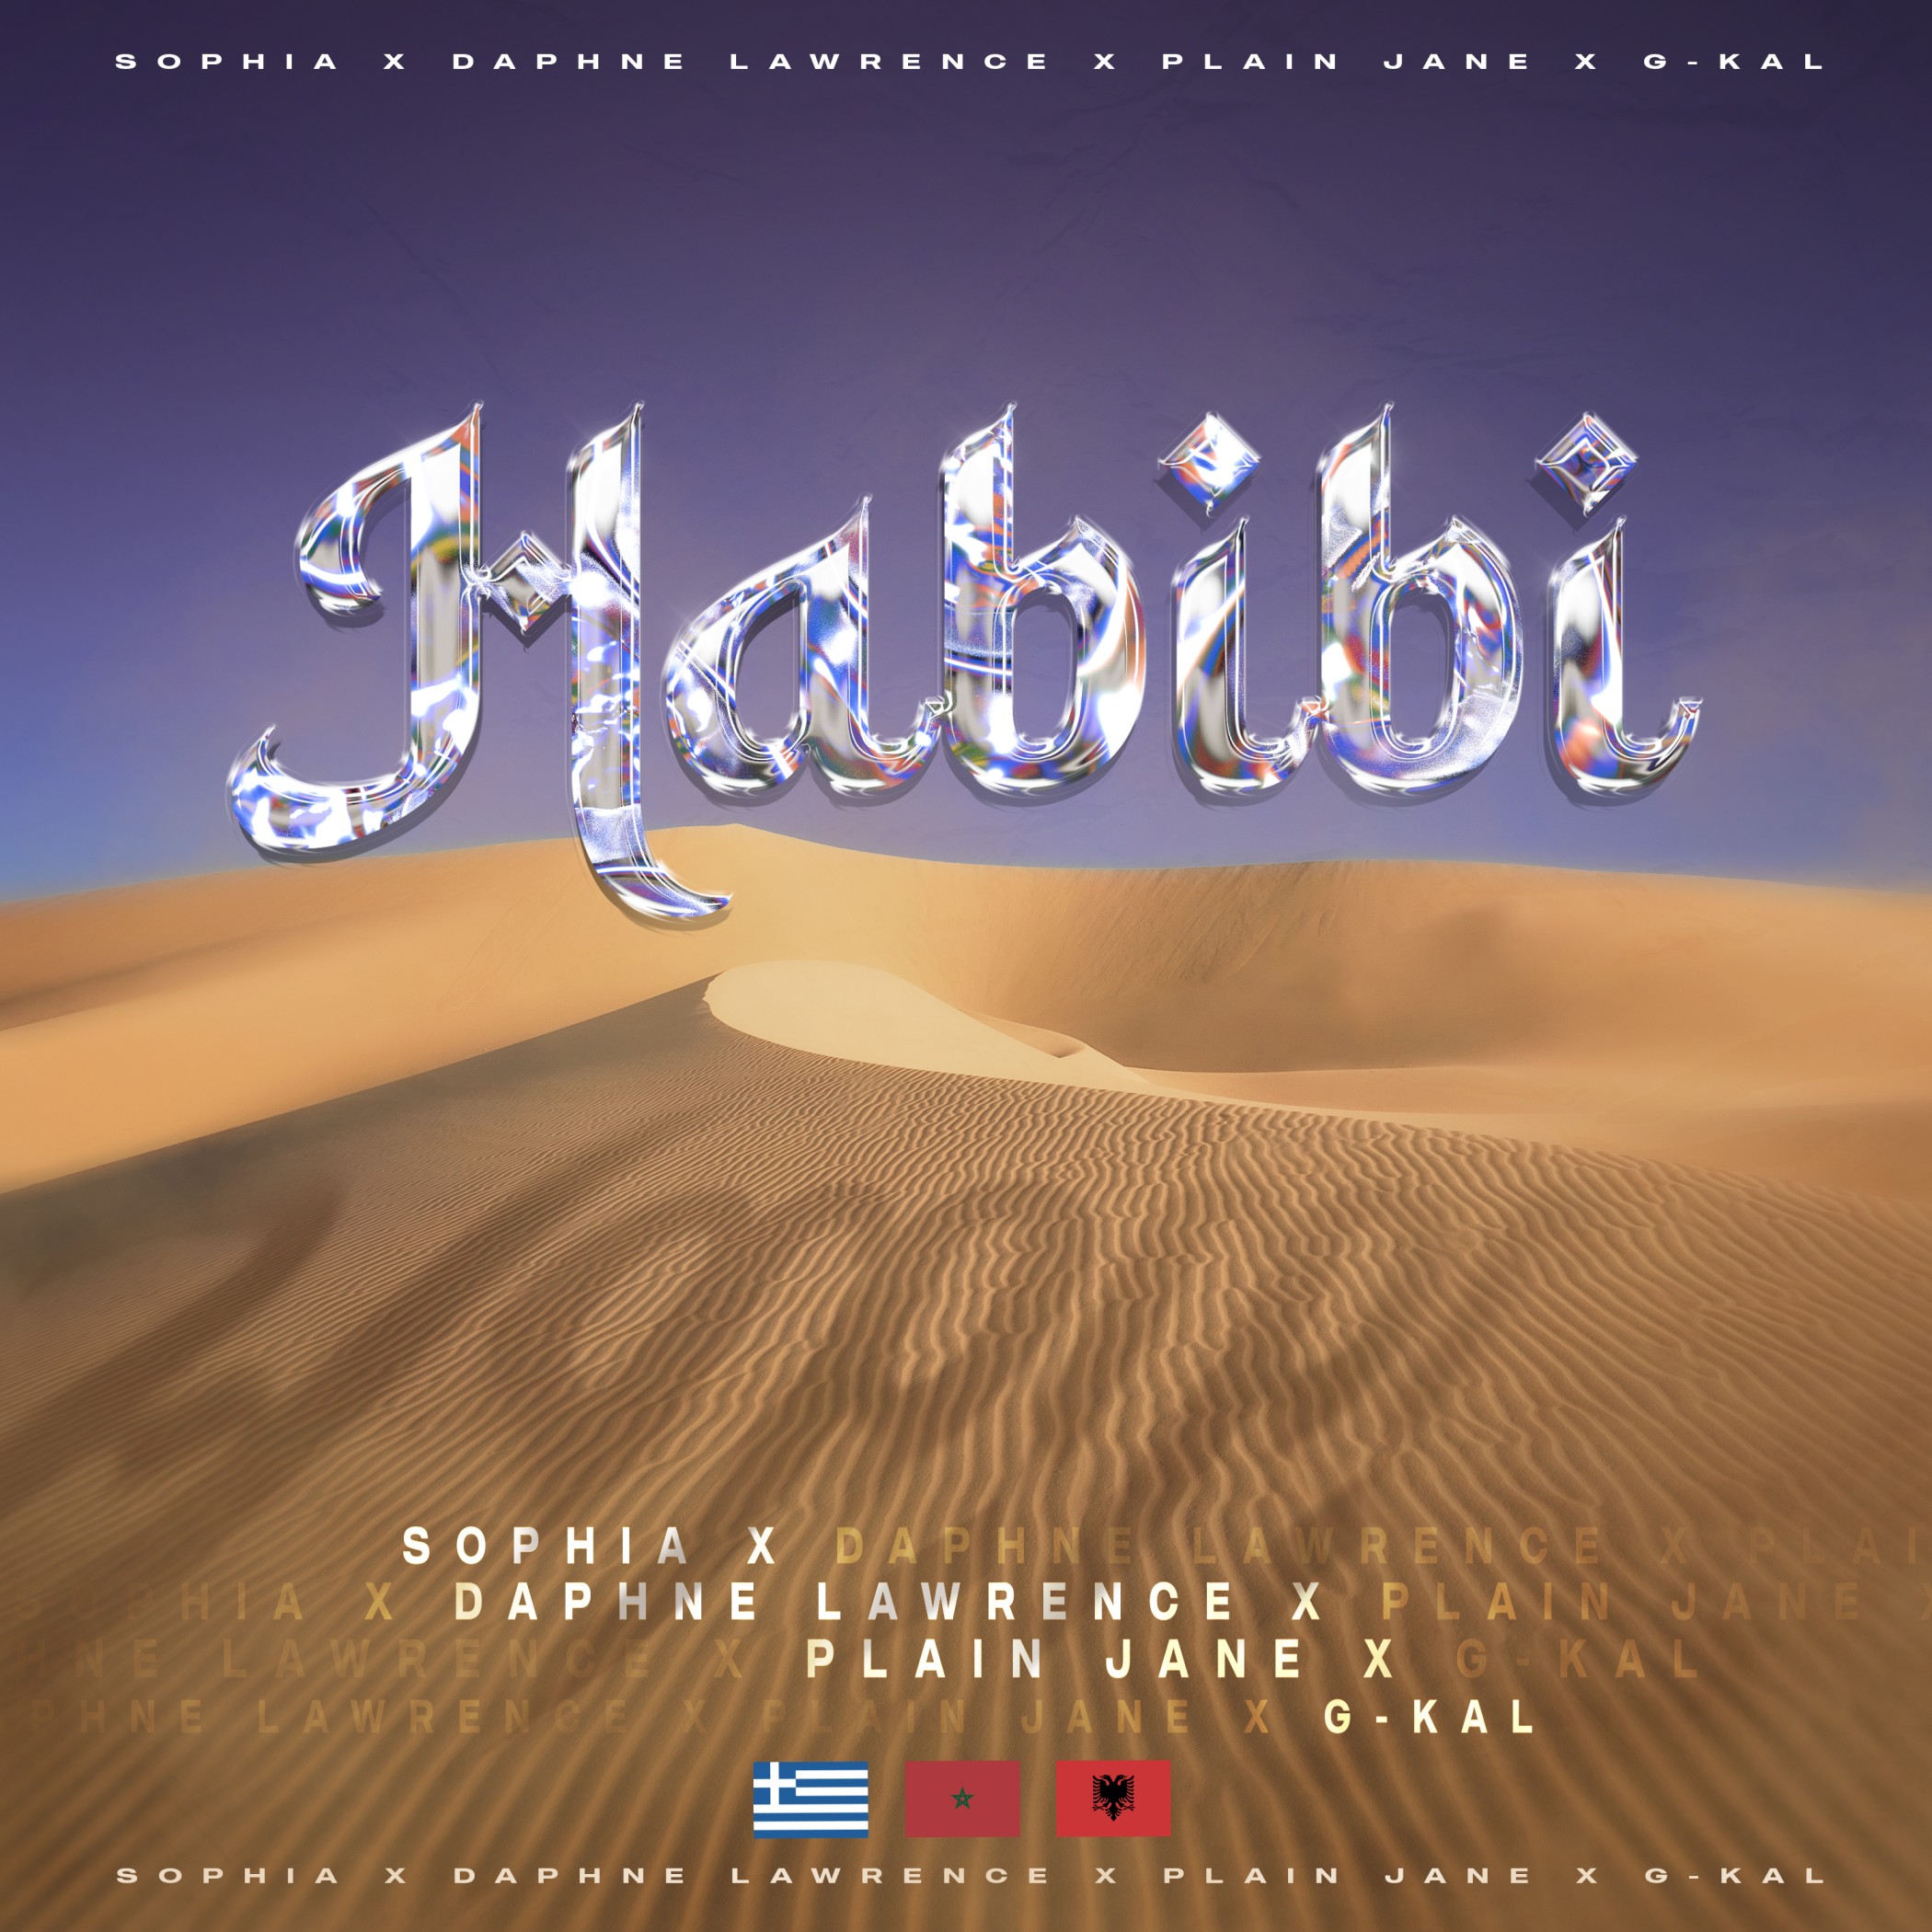 Sophia, Daphne Lawrence & Plain Jane ενώνουν τις δυνάμεις τους στο νέο τρίγλωσσο viral hit “Habibi”